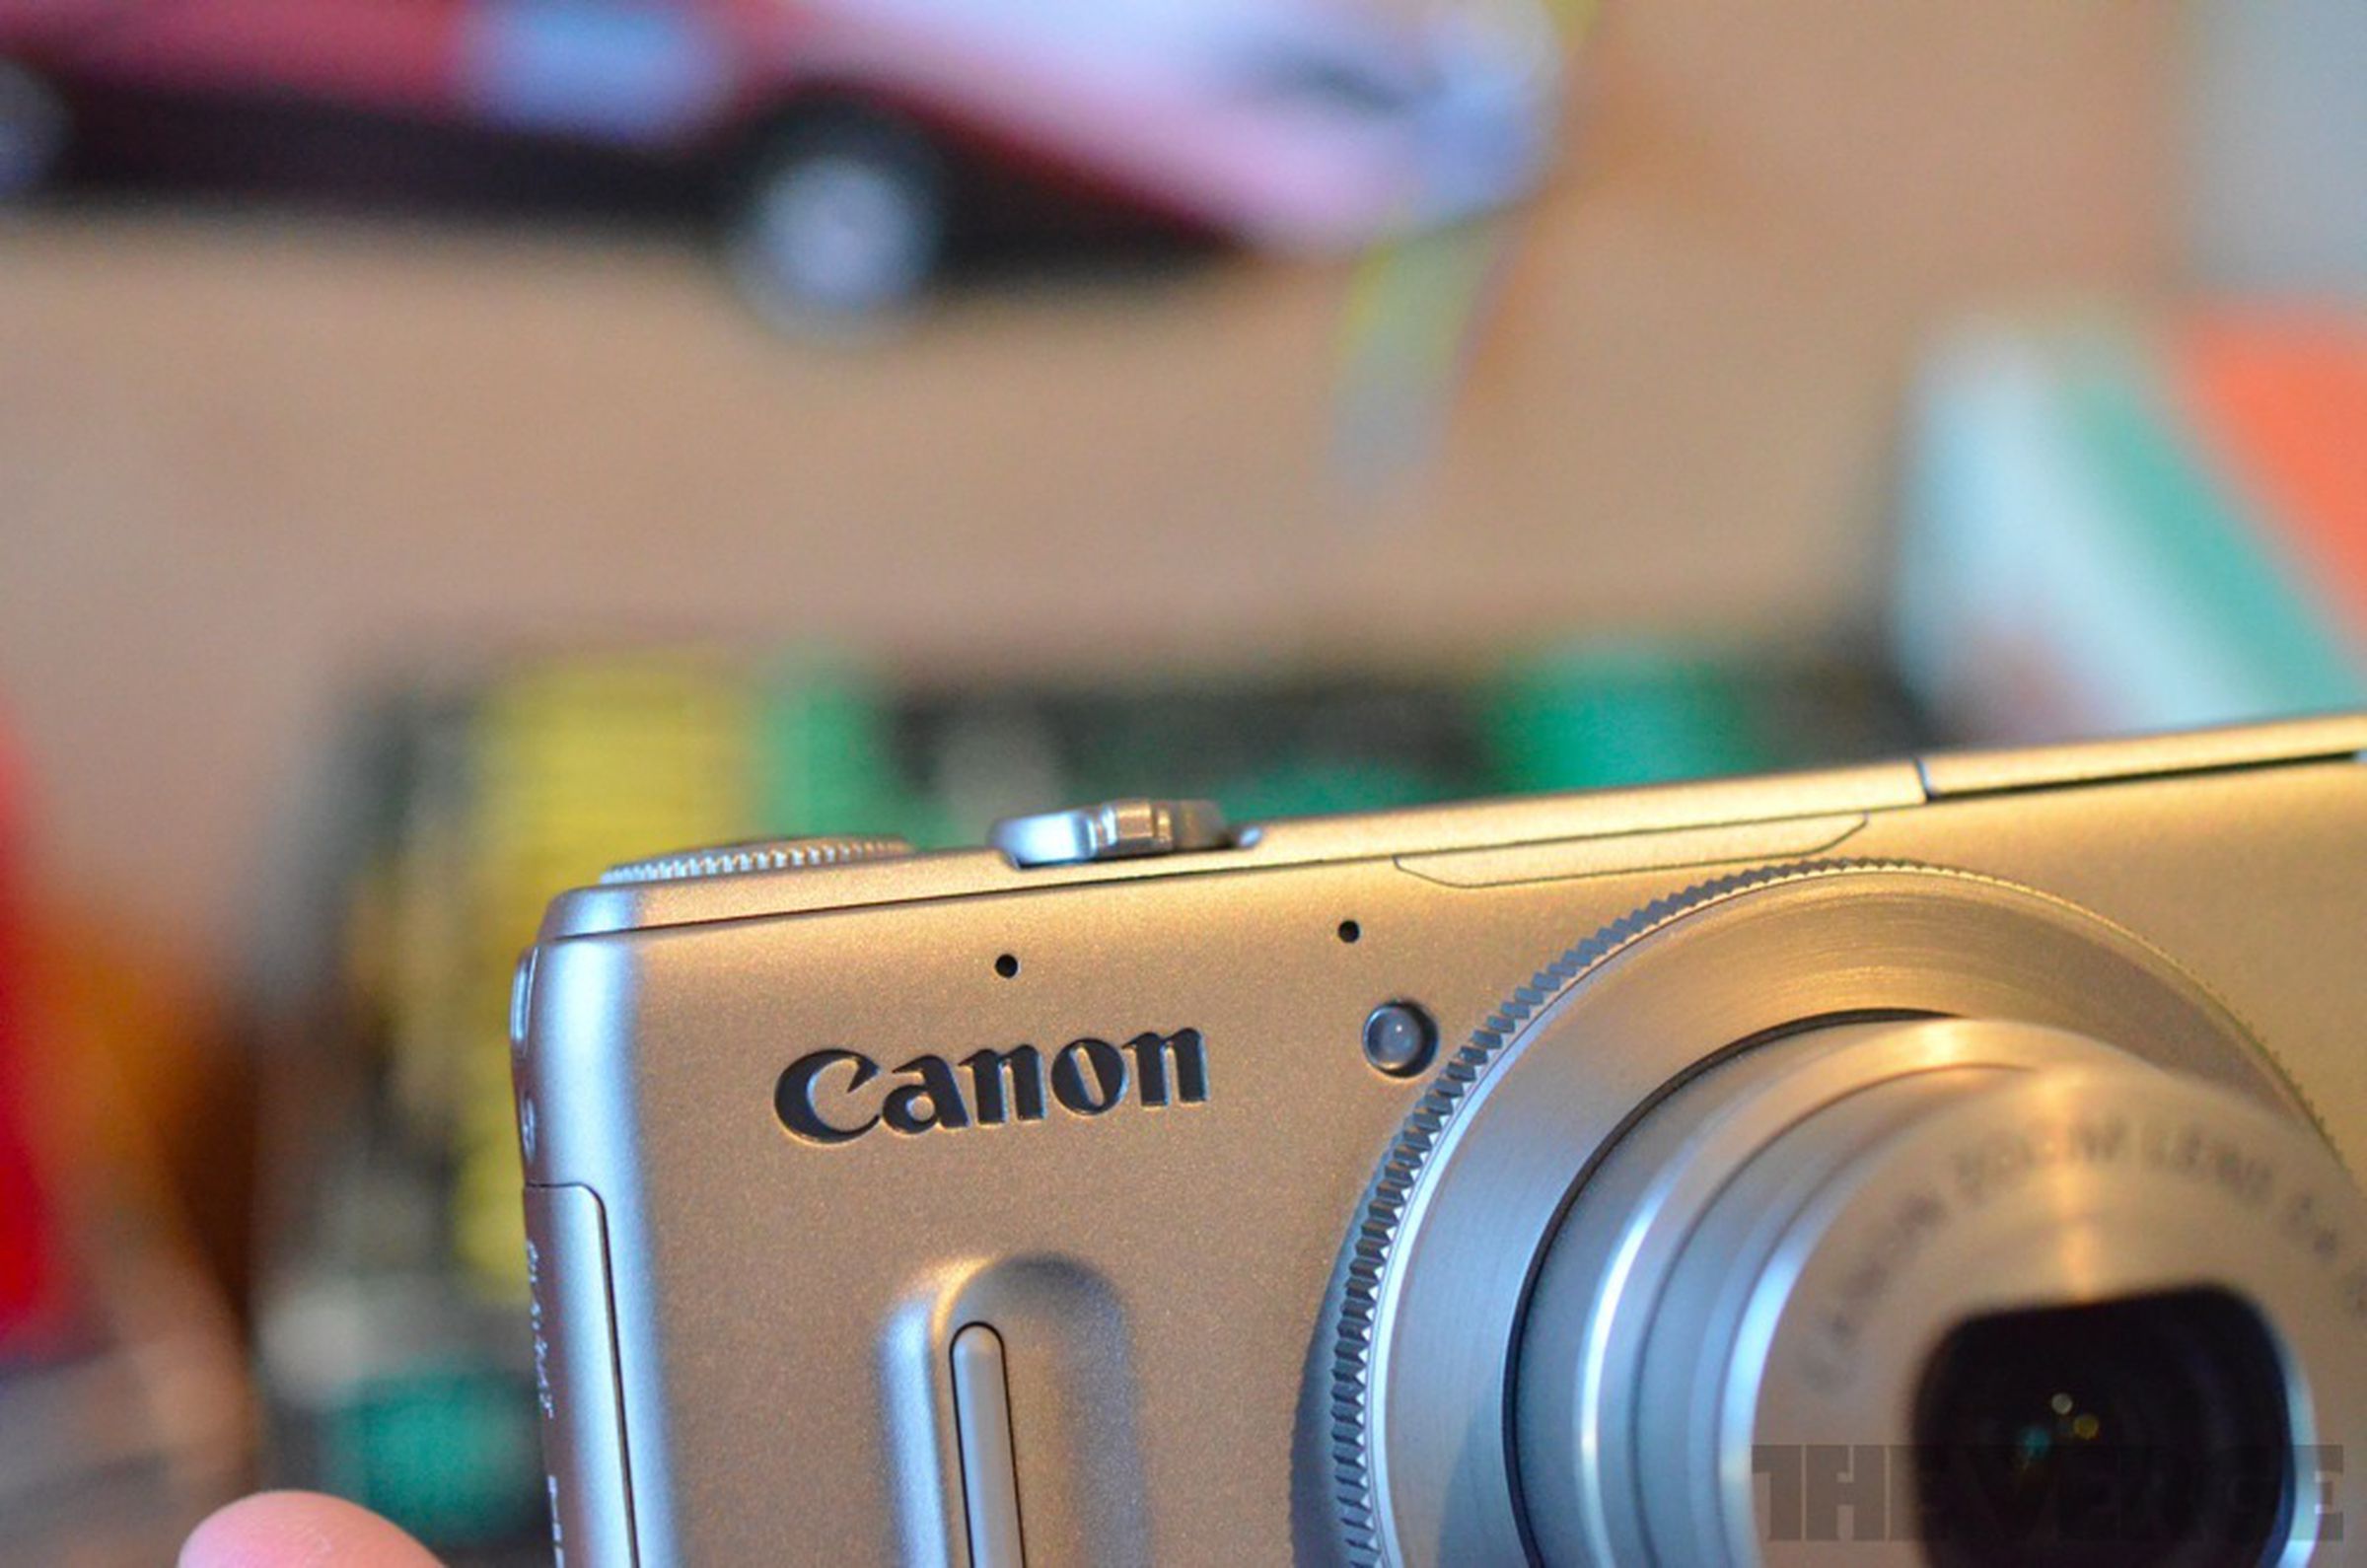 Canon PowerShot S100 review photos